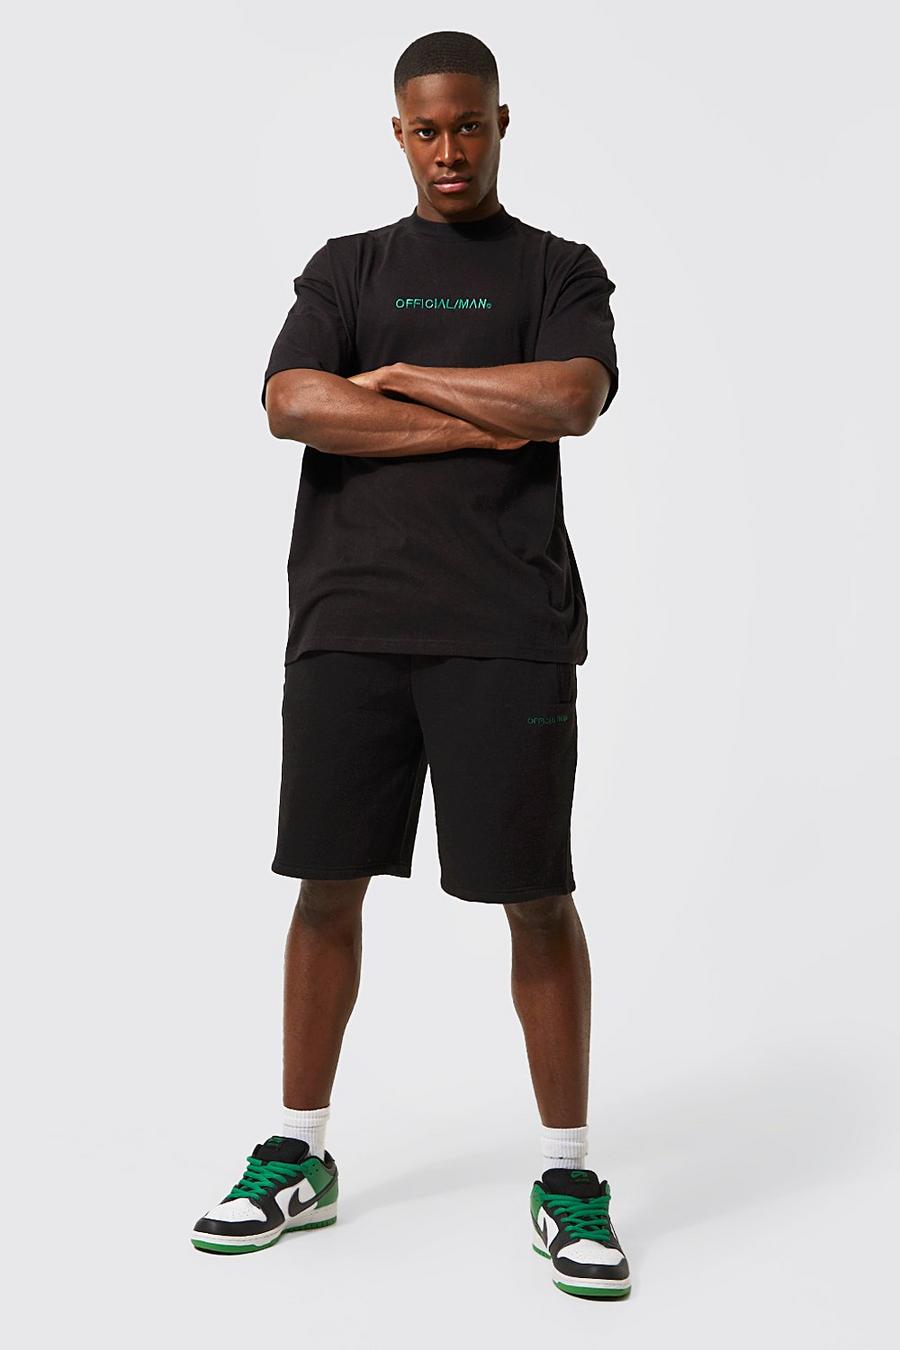 Black Oversized Man T-shirt And Short Tracksuit